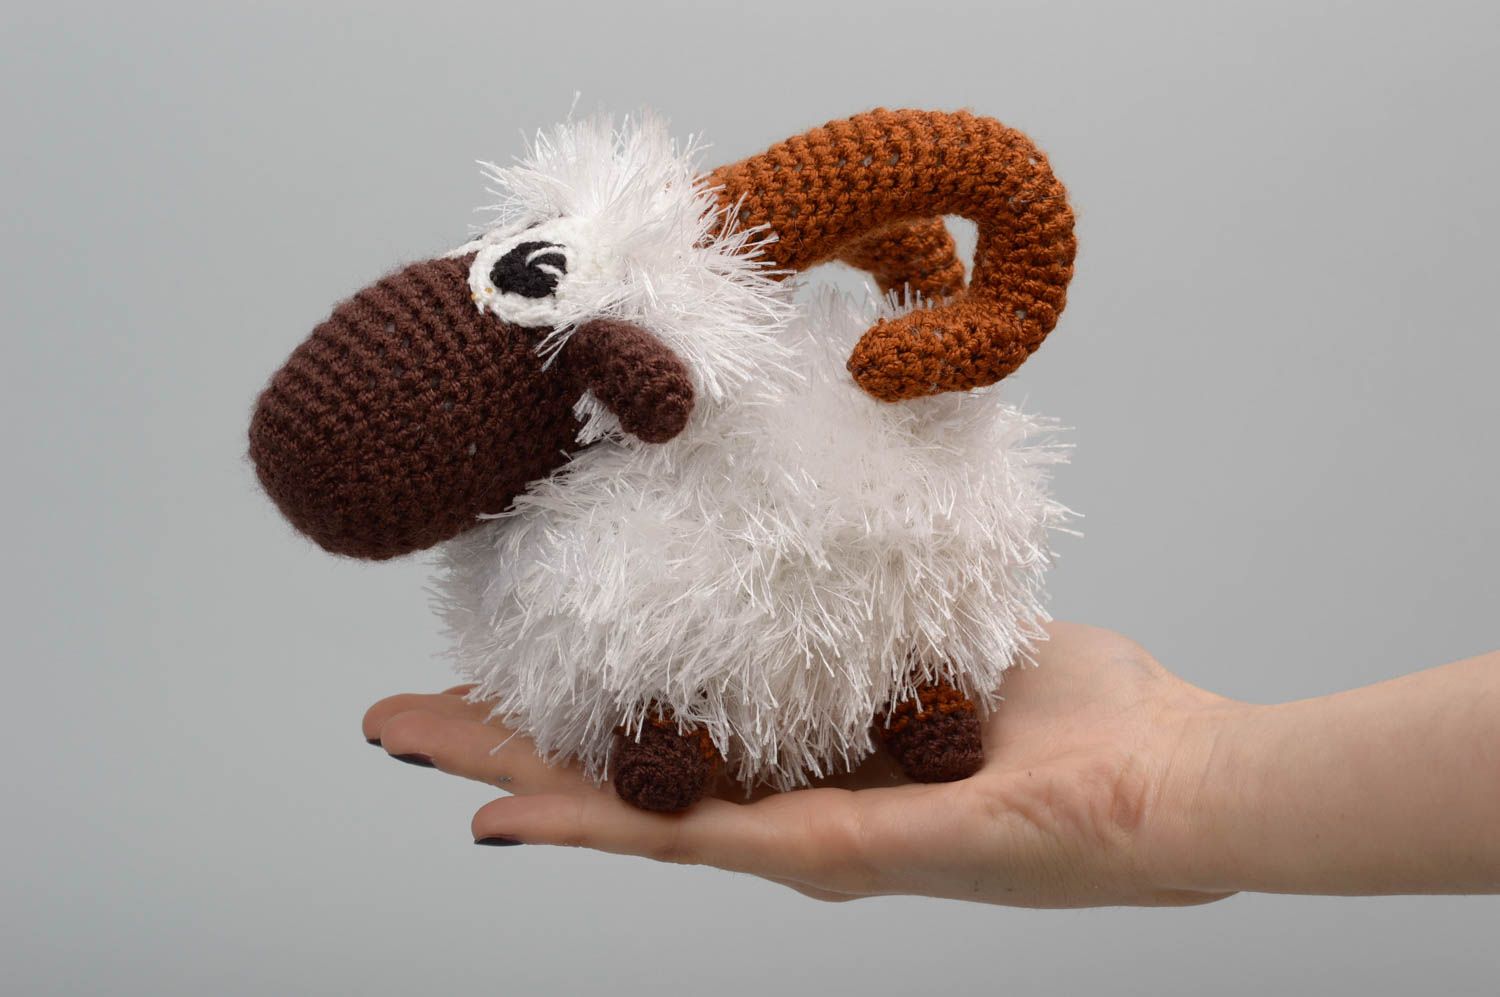 Handmade toy cuddly toys stuffed animals souvenir ideas nursery decor gift ideas photo 5